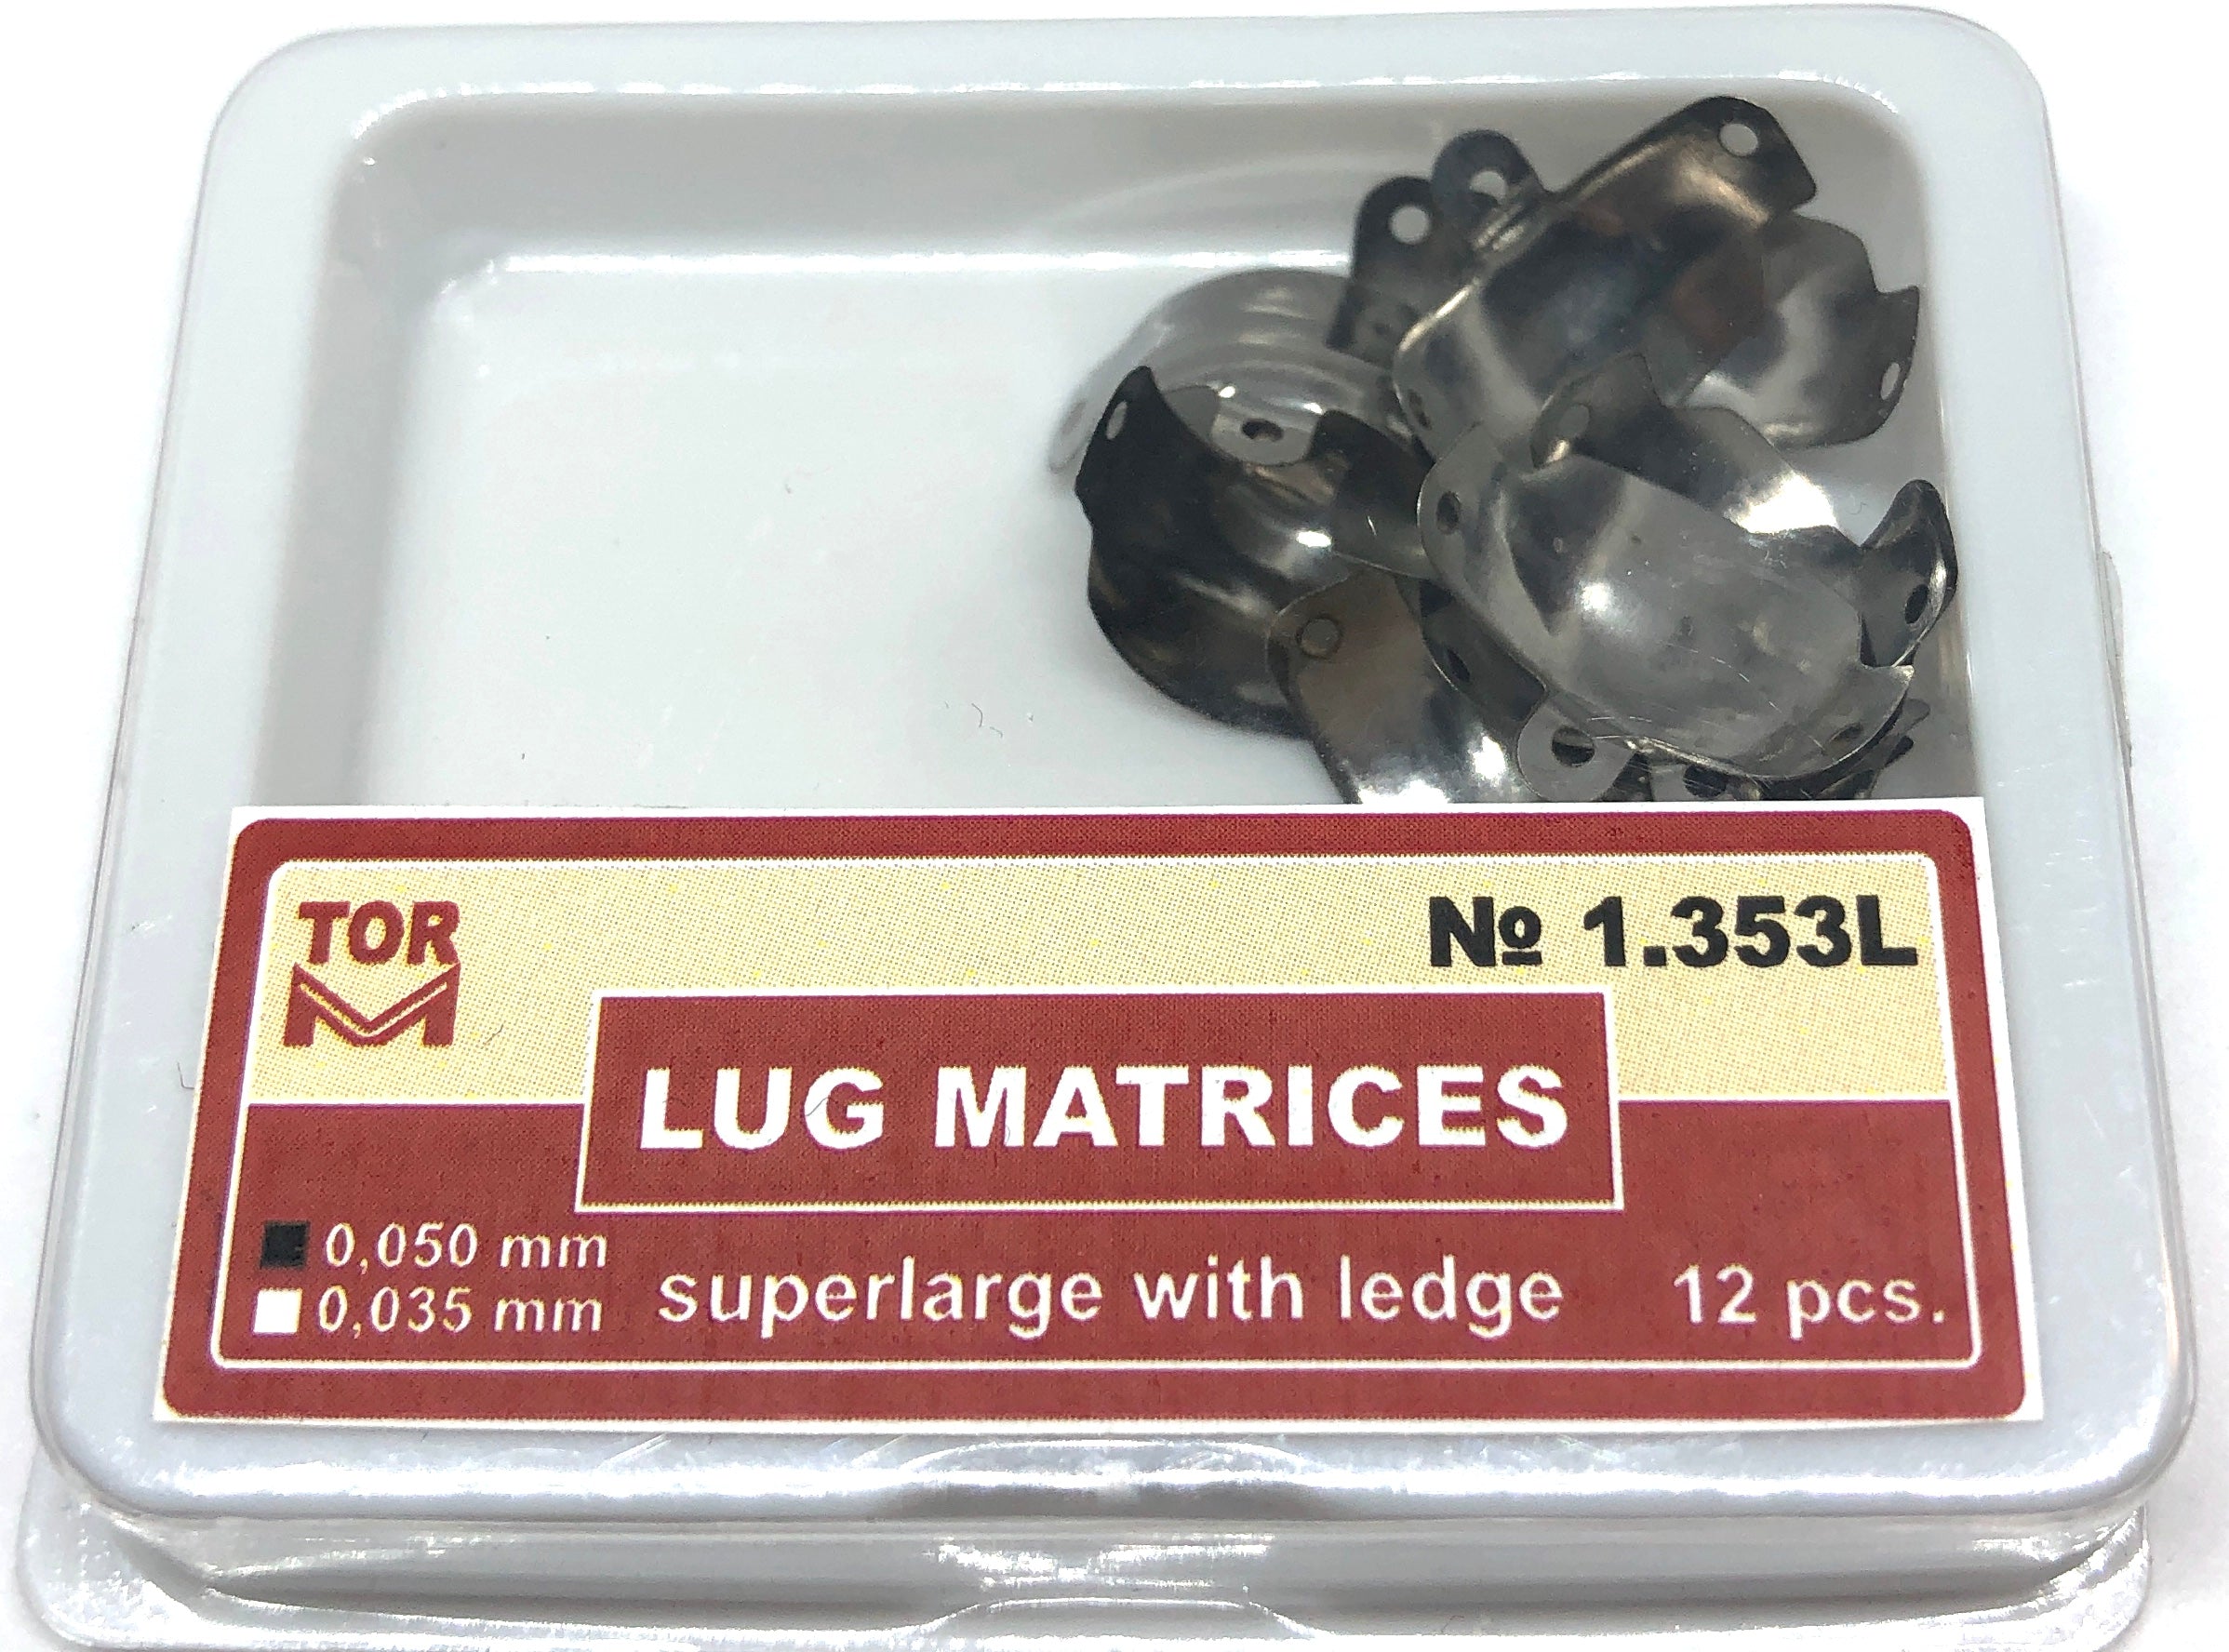 lug-matrices-super-large-with-ledge-12-pcs